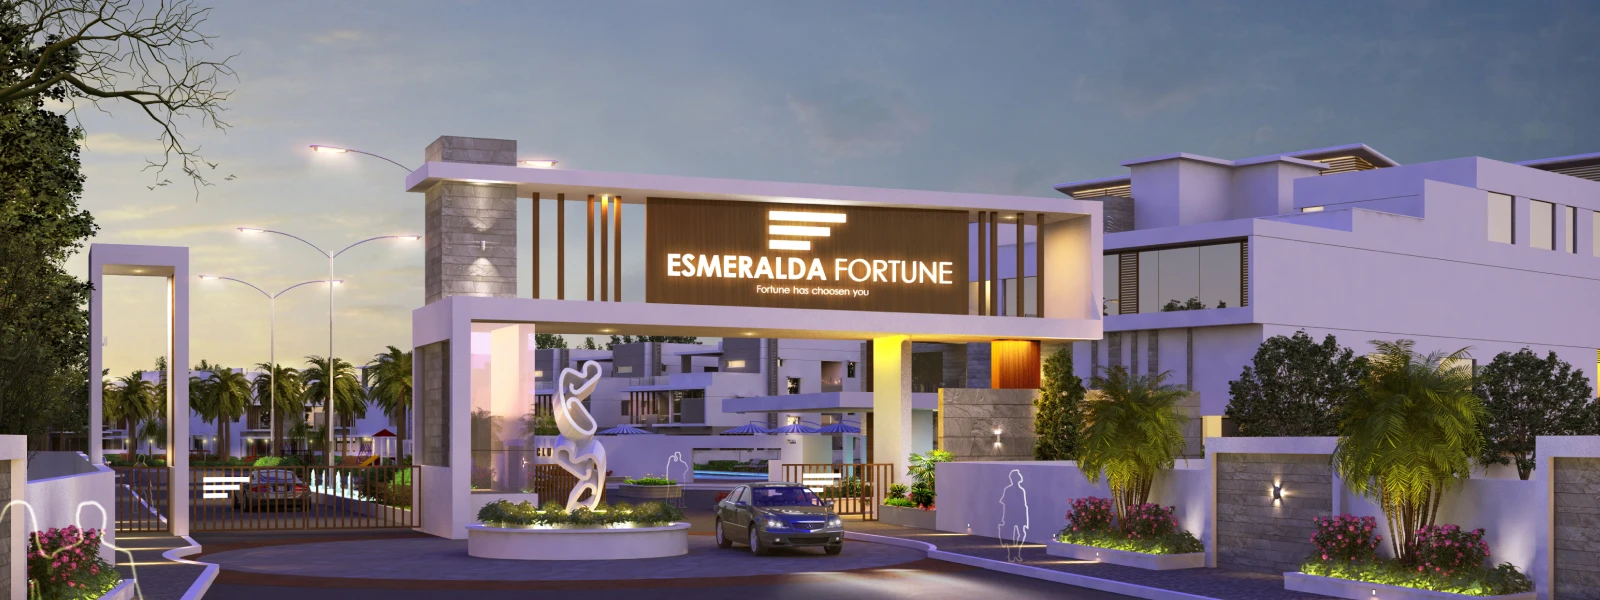 Sri Sreenivasa Esmeralda Fortune